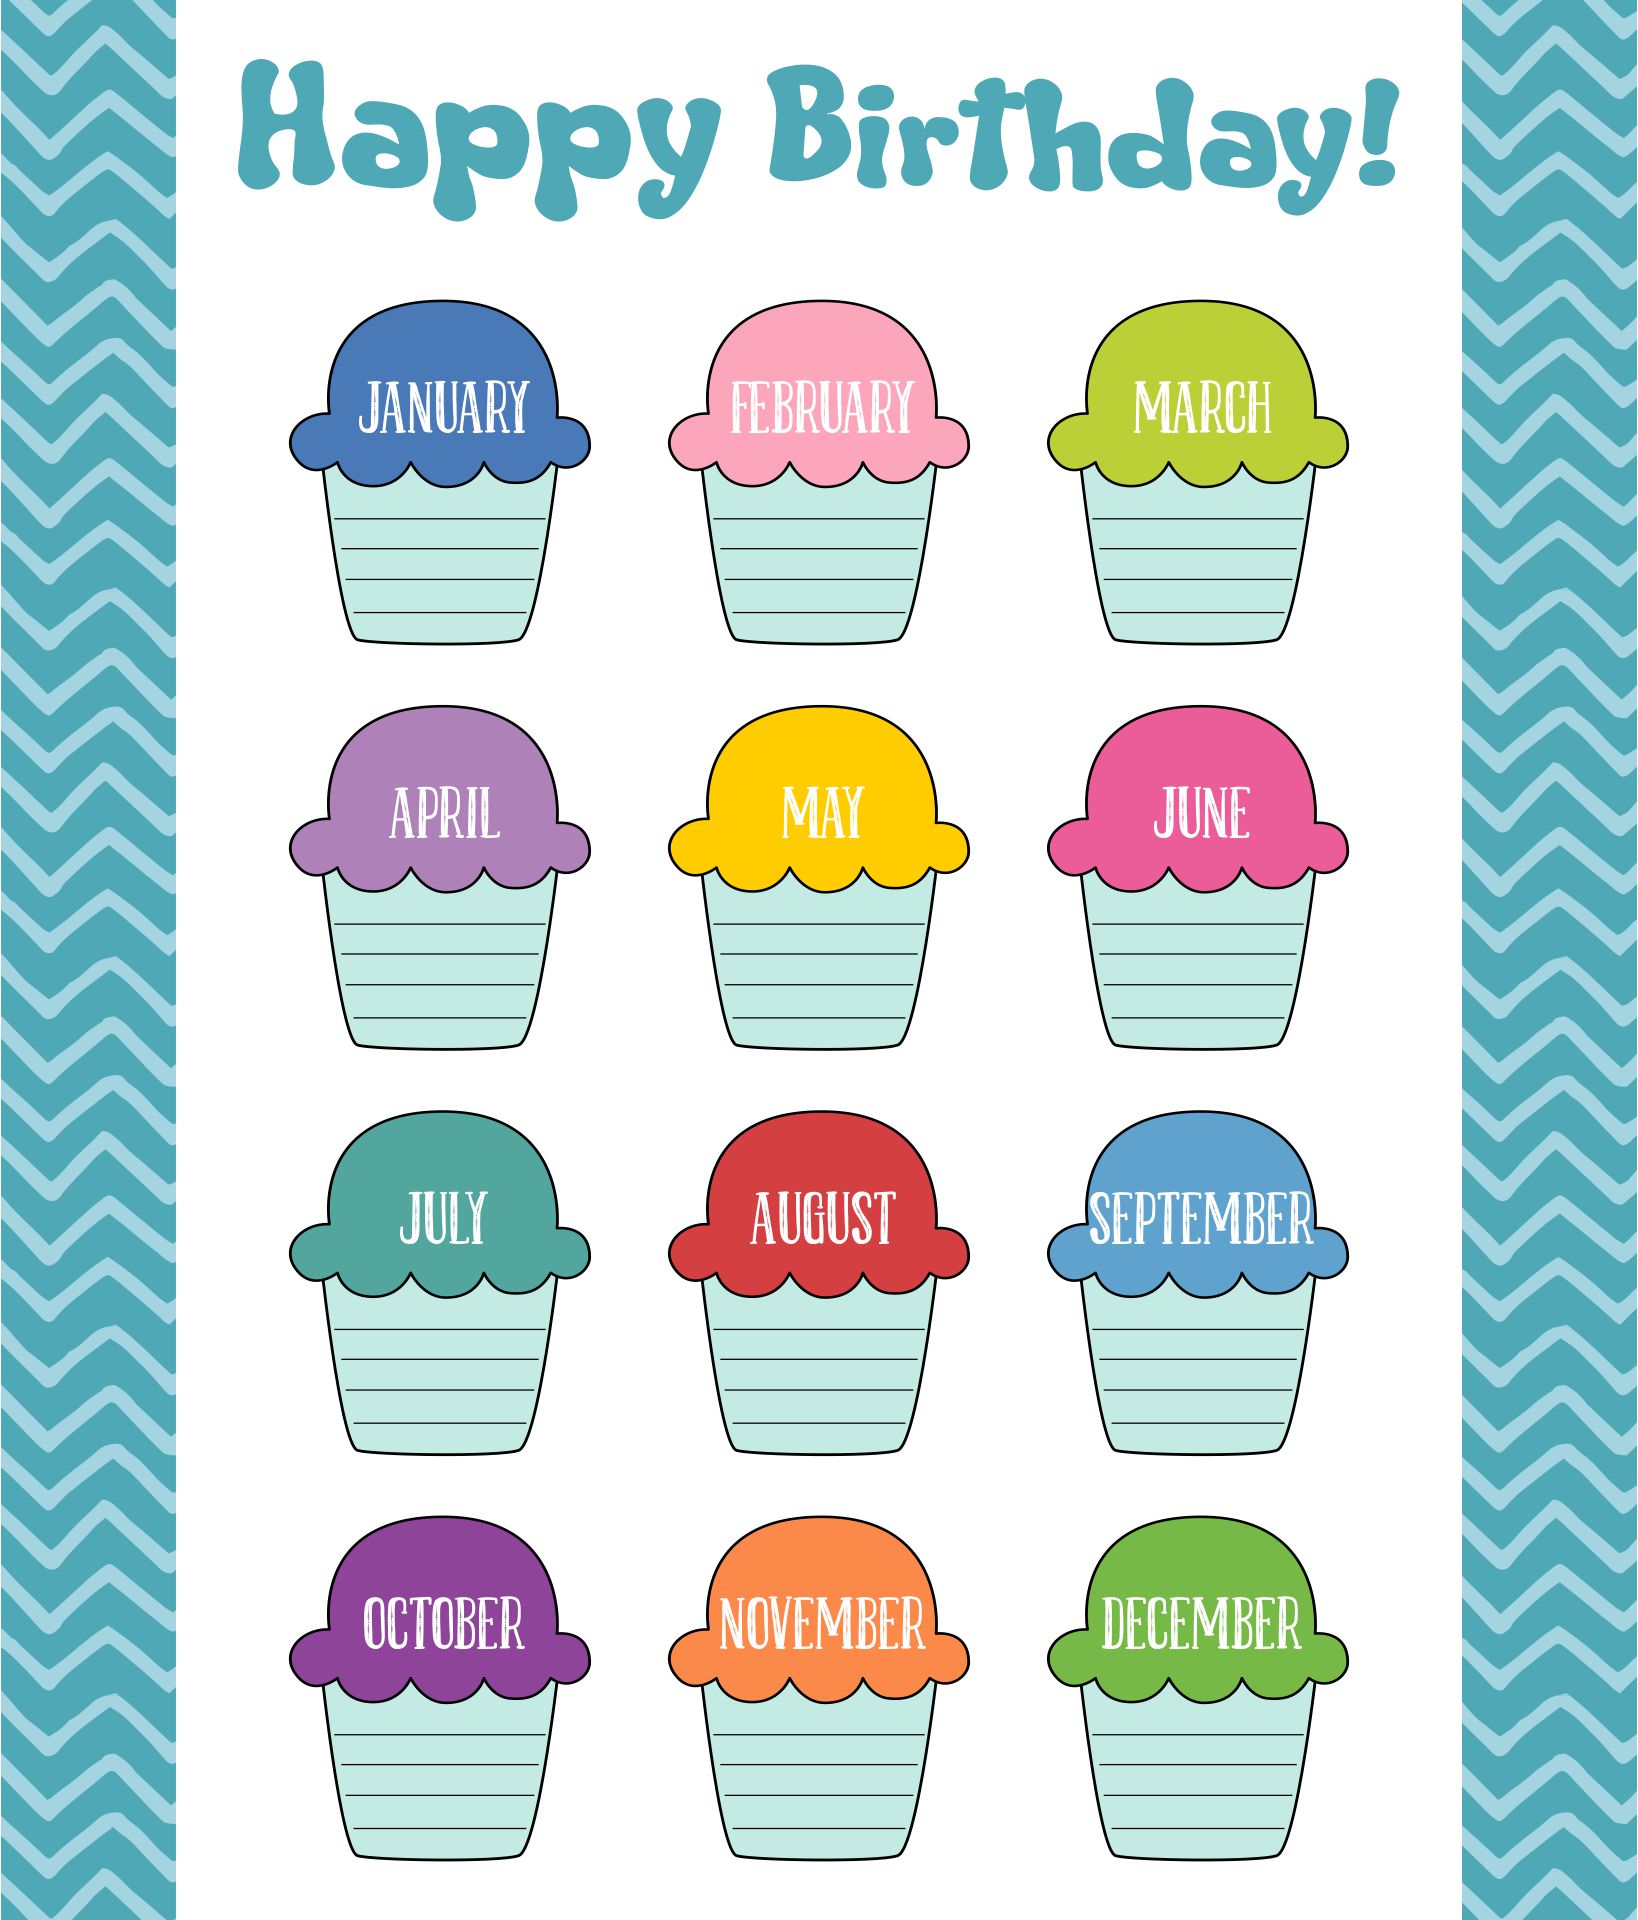 4-best-images-of-printable-birthday-calendar-cupcakes-happy-birthday